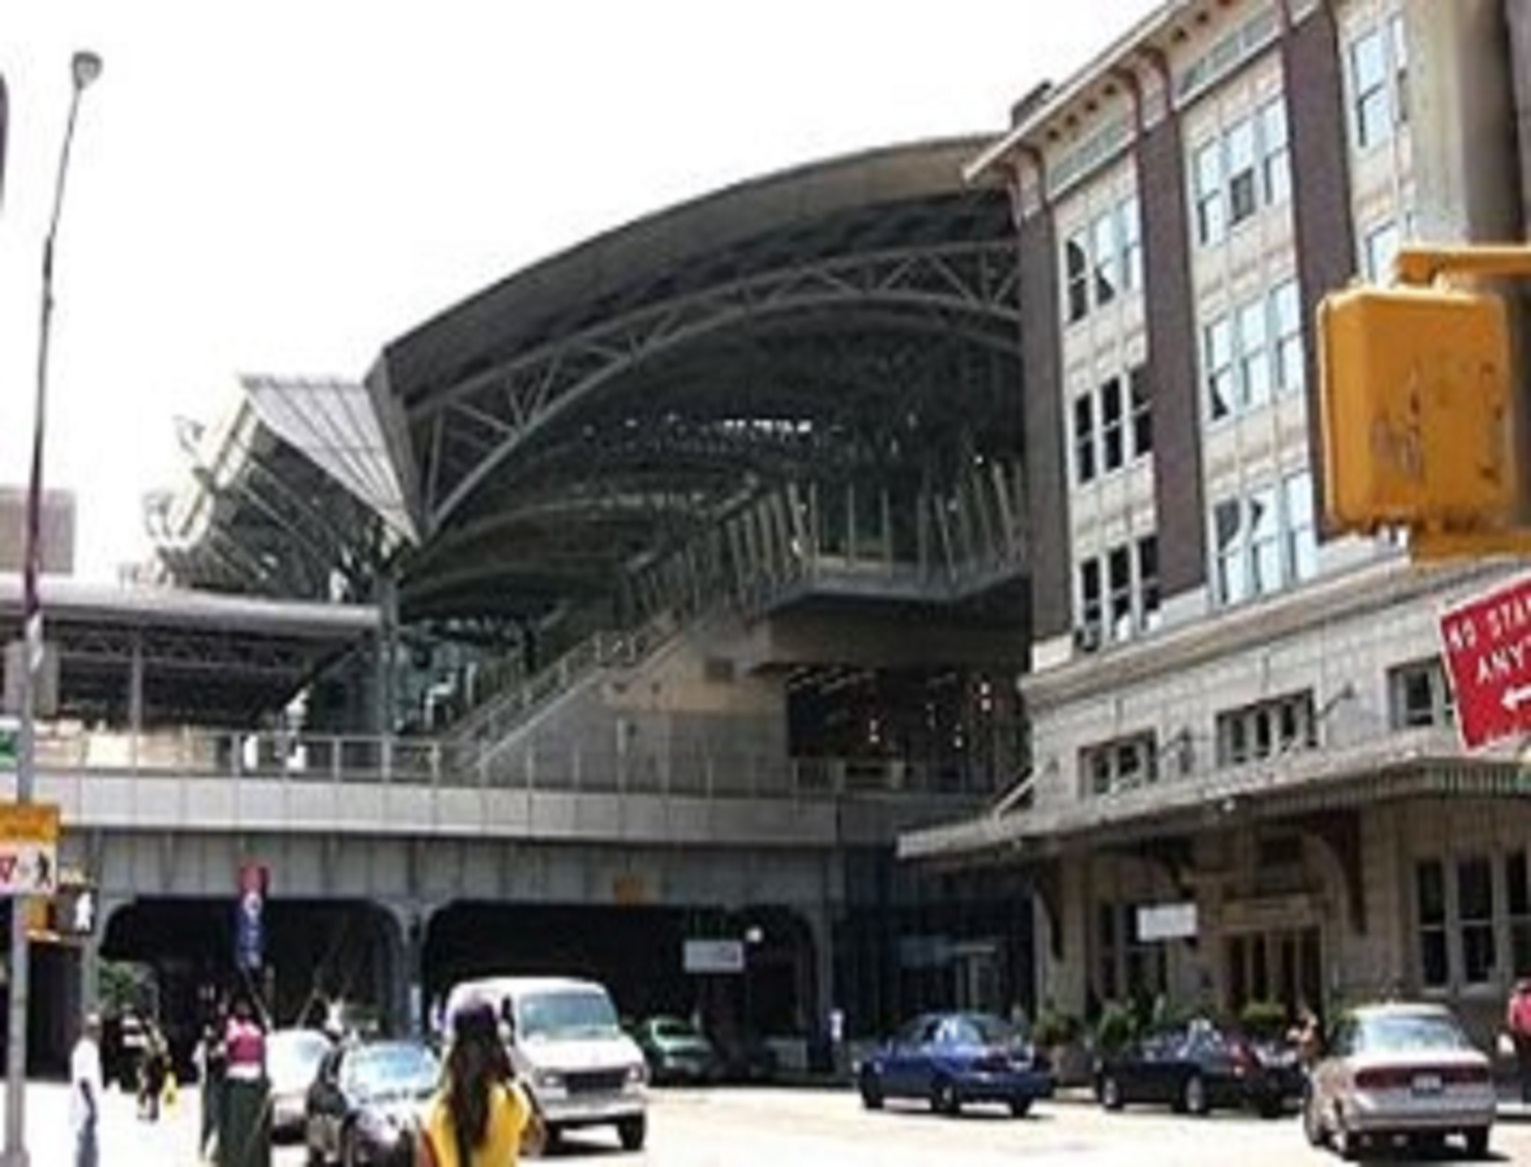 Jamaica Central Station